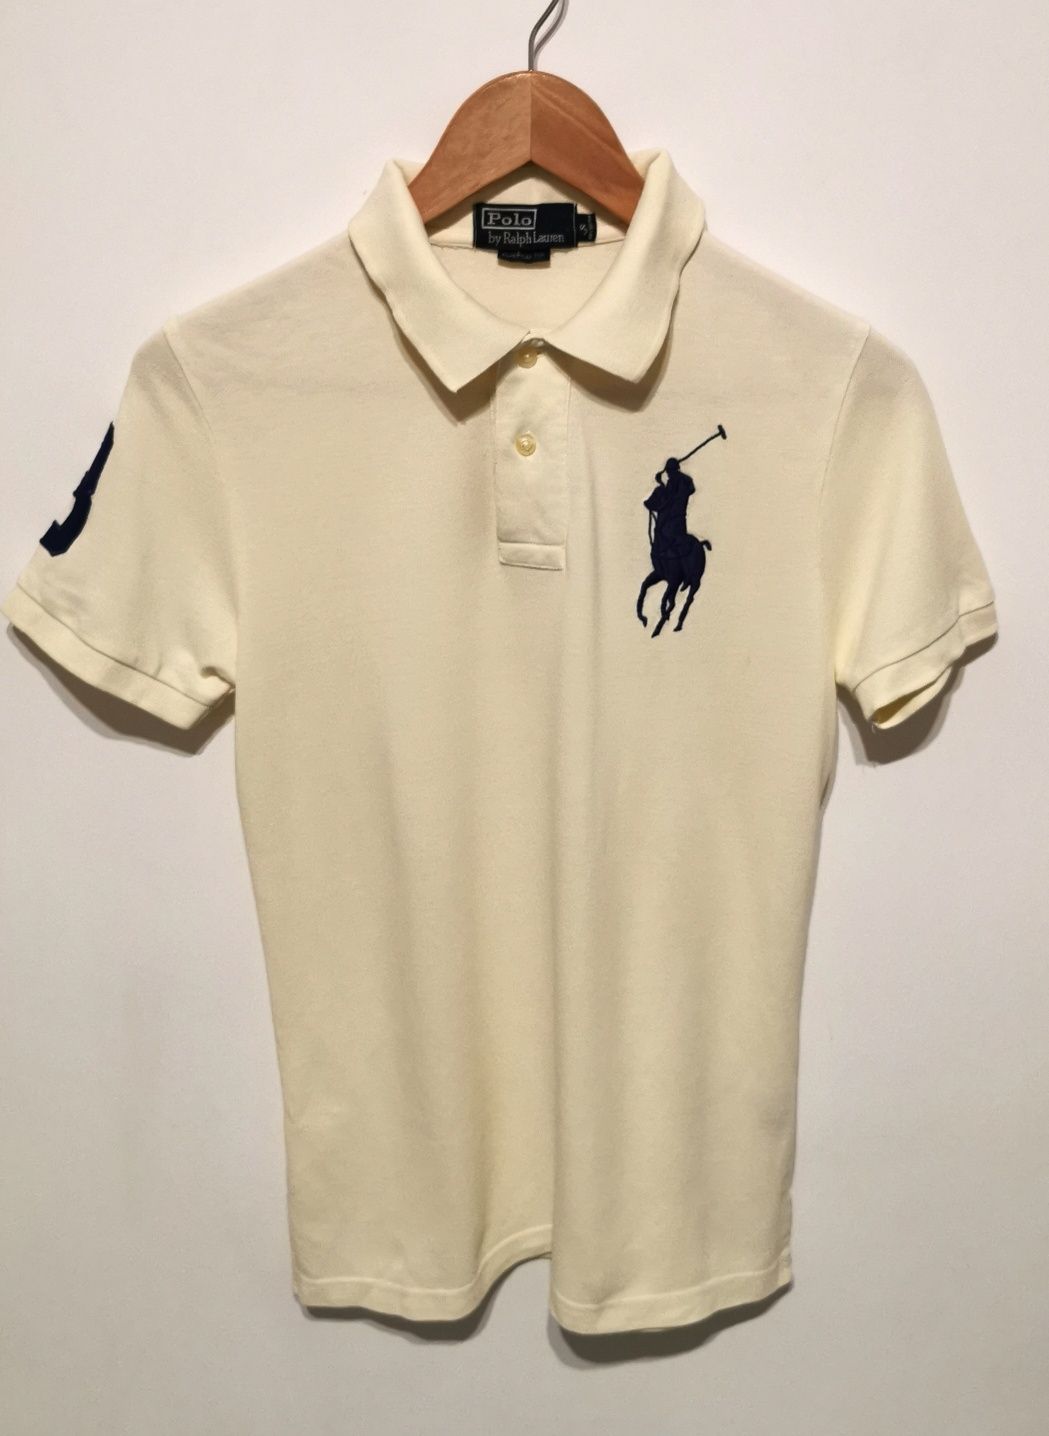 Ralph Lauren polo t-shirt koszulka krótki rękaw logowana męska S